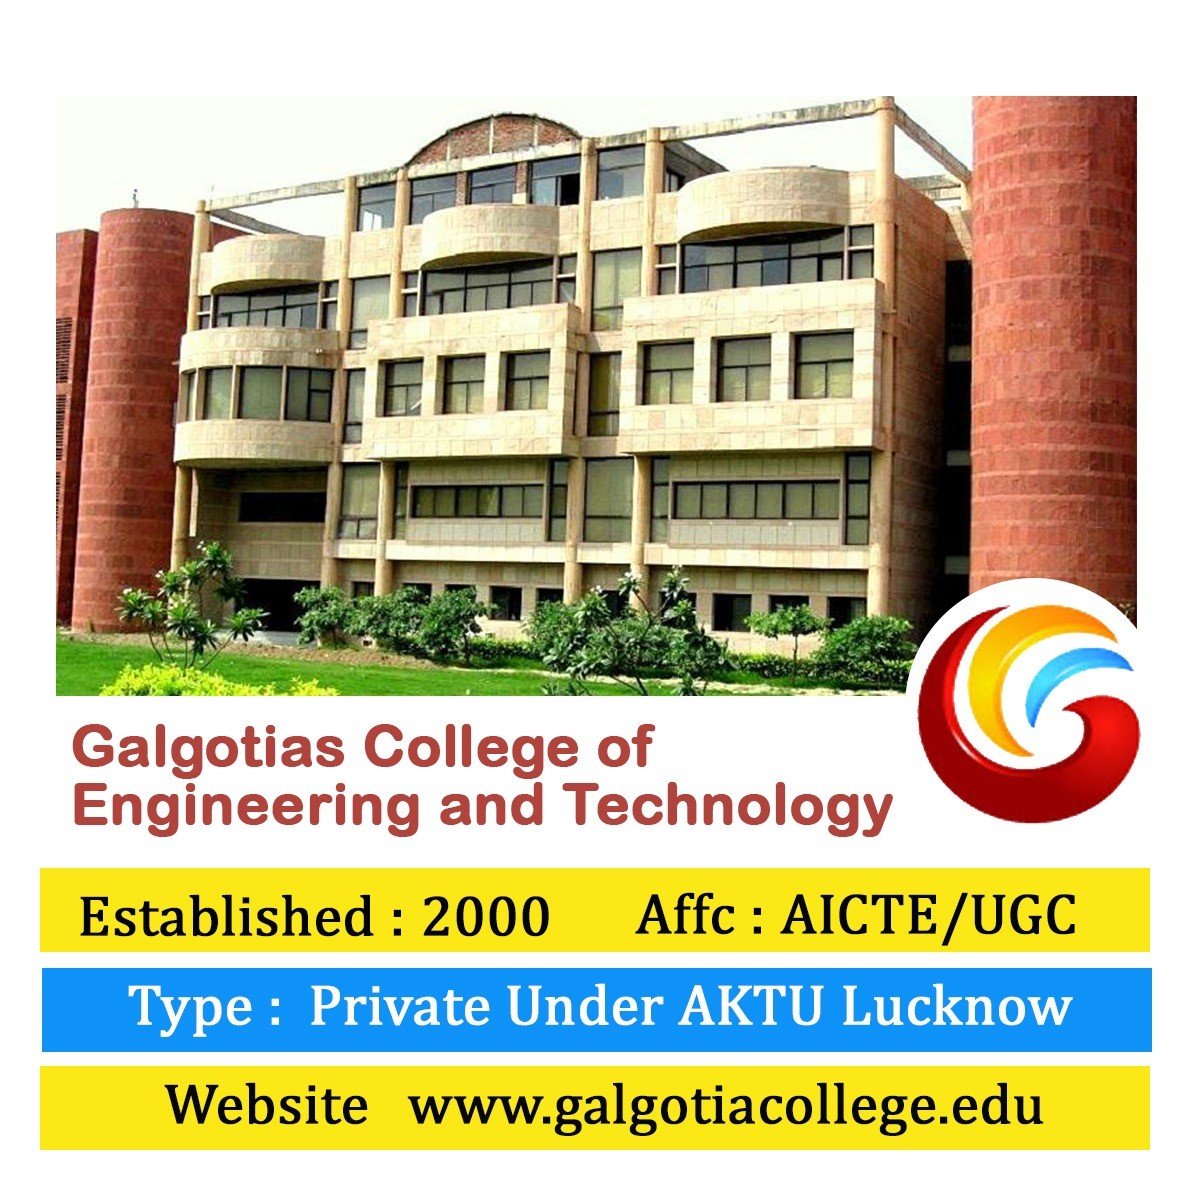 Galgotias College of Engineering